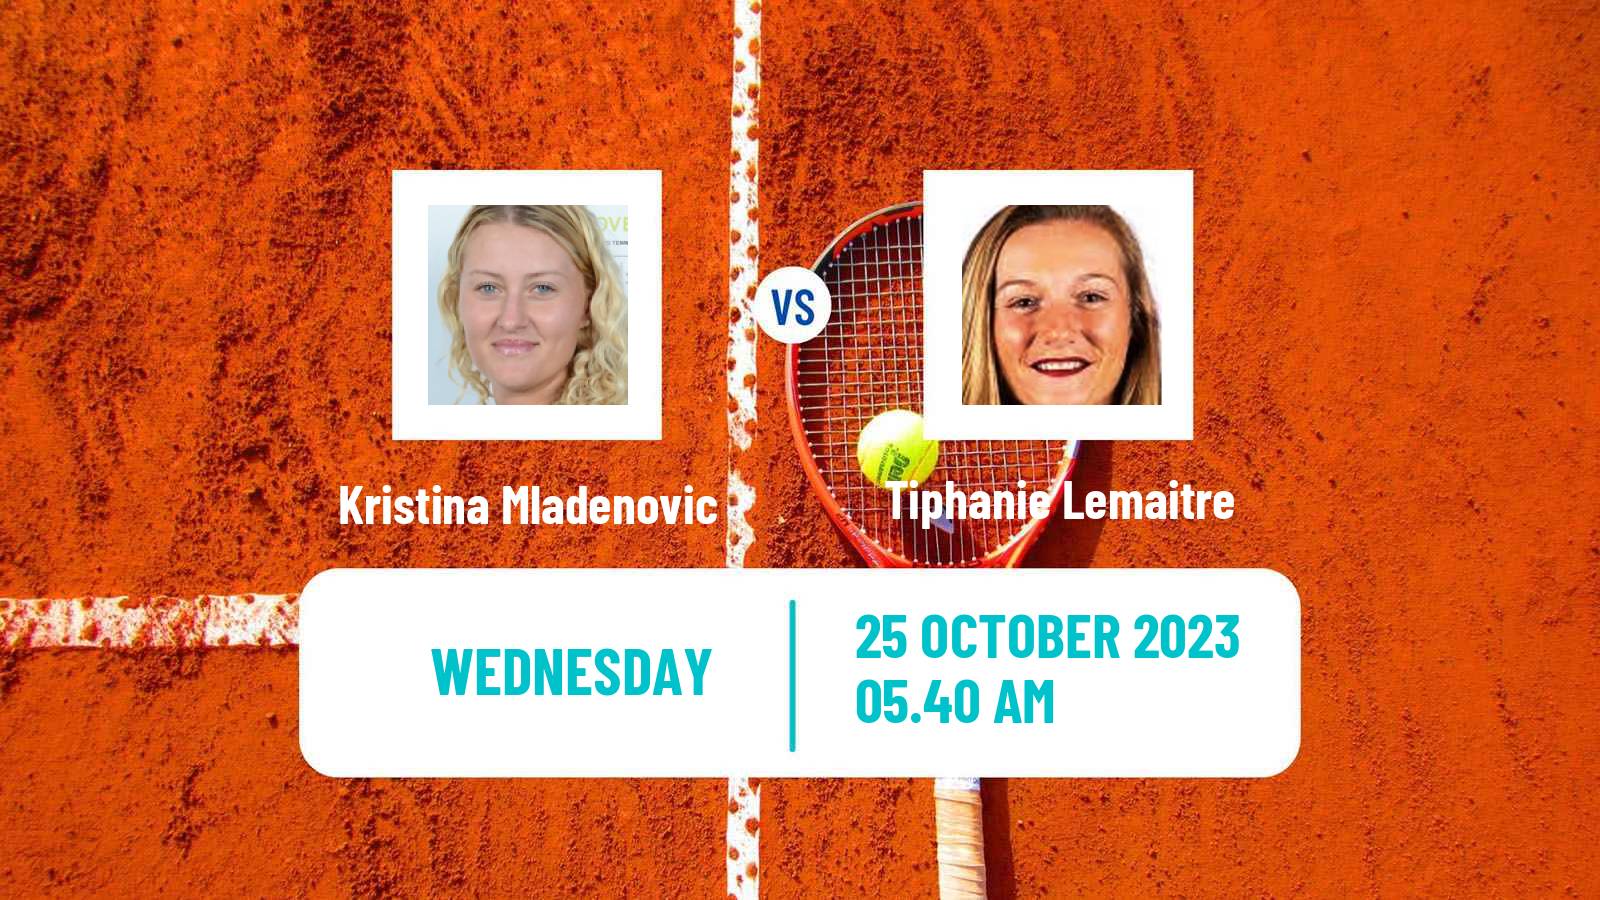 Tennis ITF W80 Poitiers Women Kristina Mladenovic - Tiphanie Lemaitre